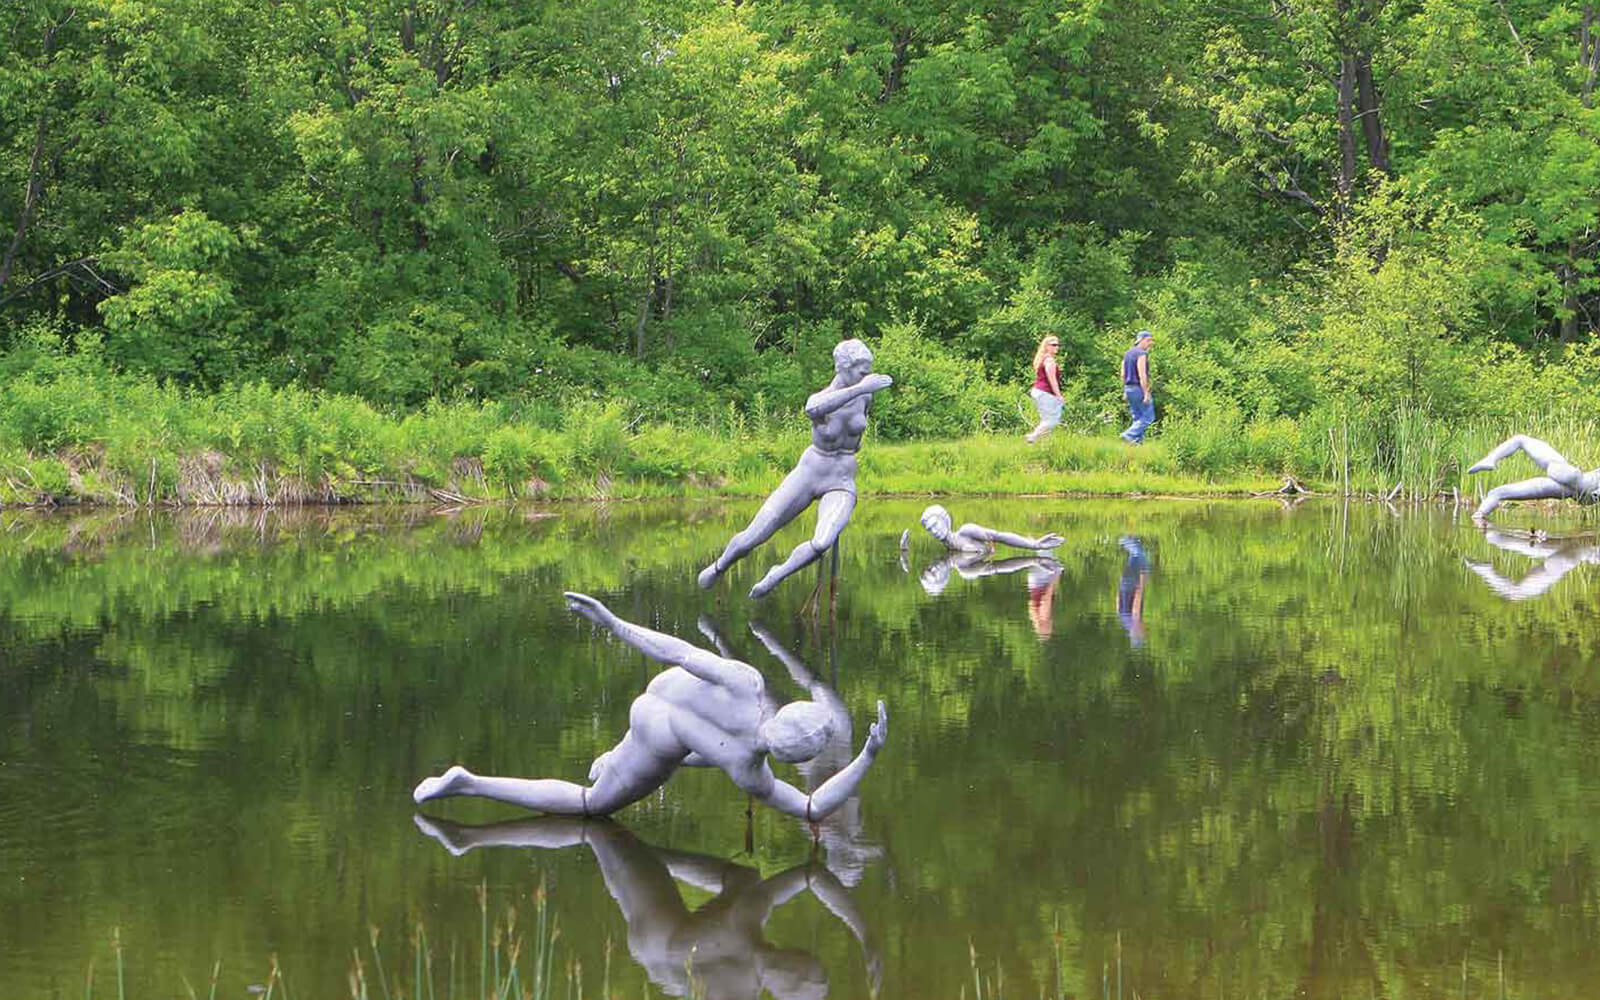 Art at the Griffis Sculpture Park near Buffalo, NY